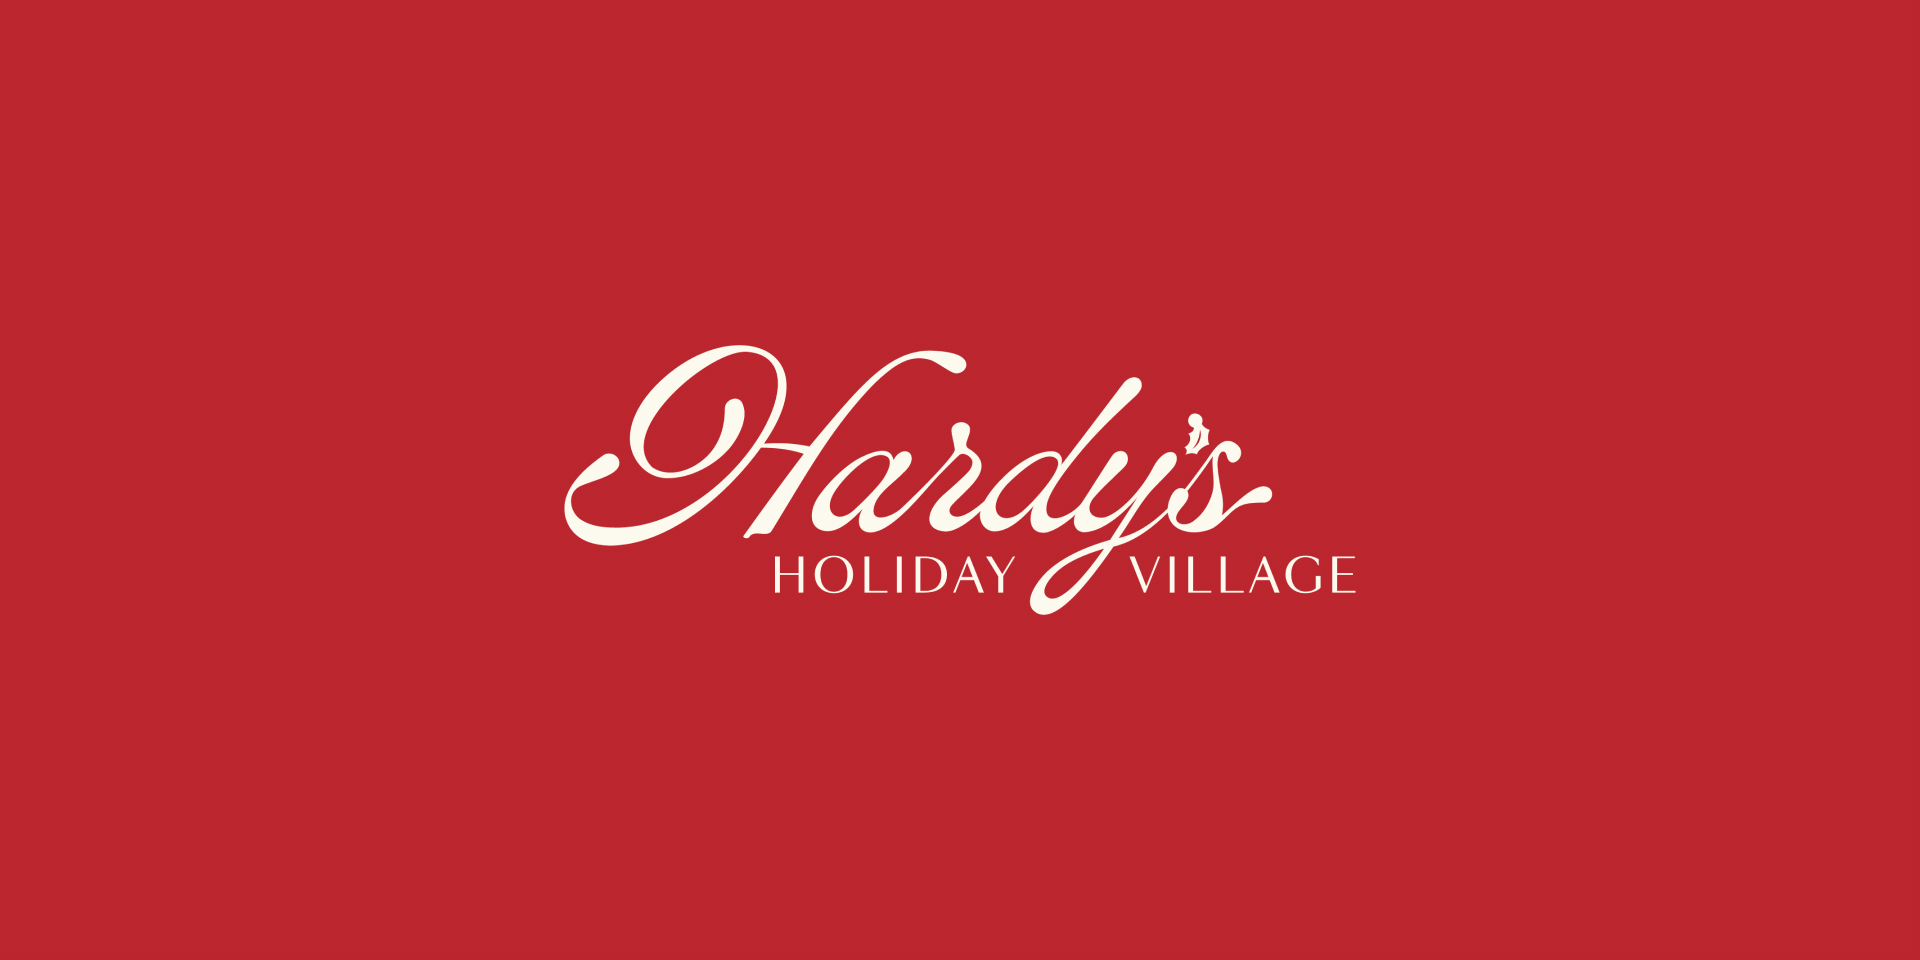 Hardys Holiday Village